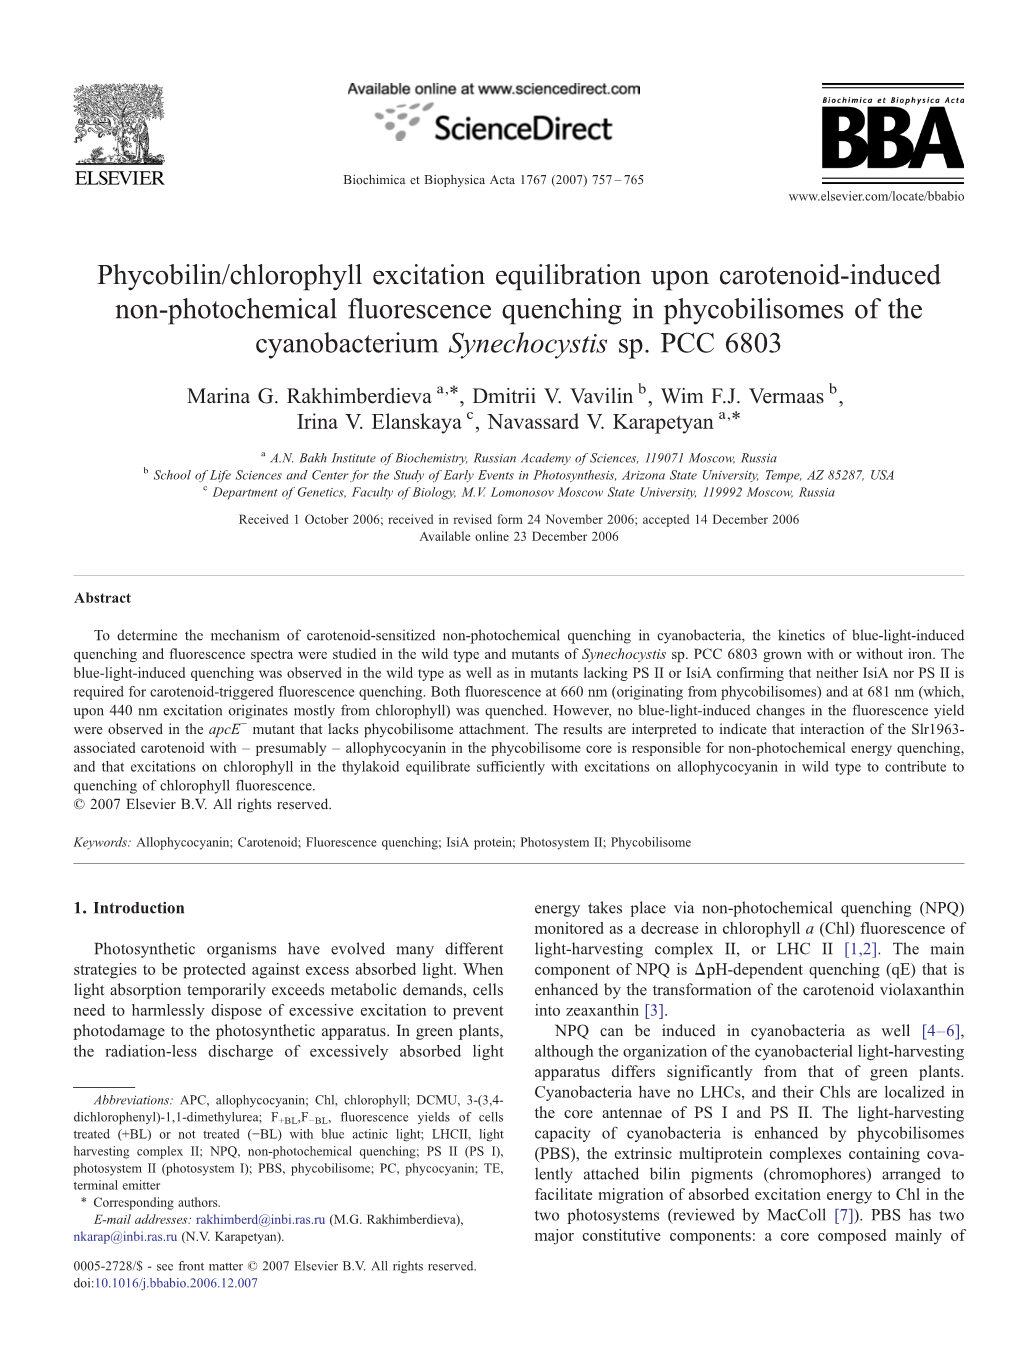 Phycobilin/Chlorophyll Excitation Equilibration Upon Carotenoid